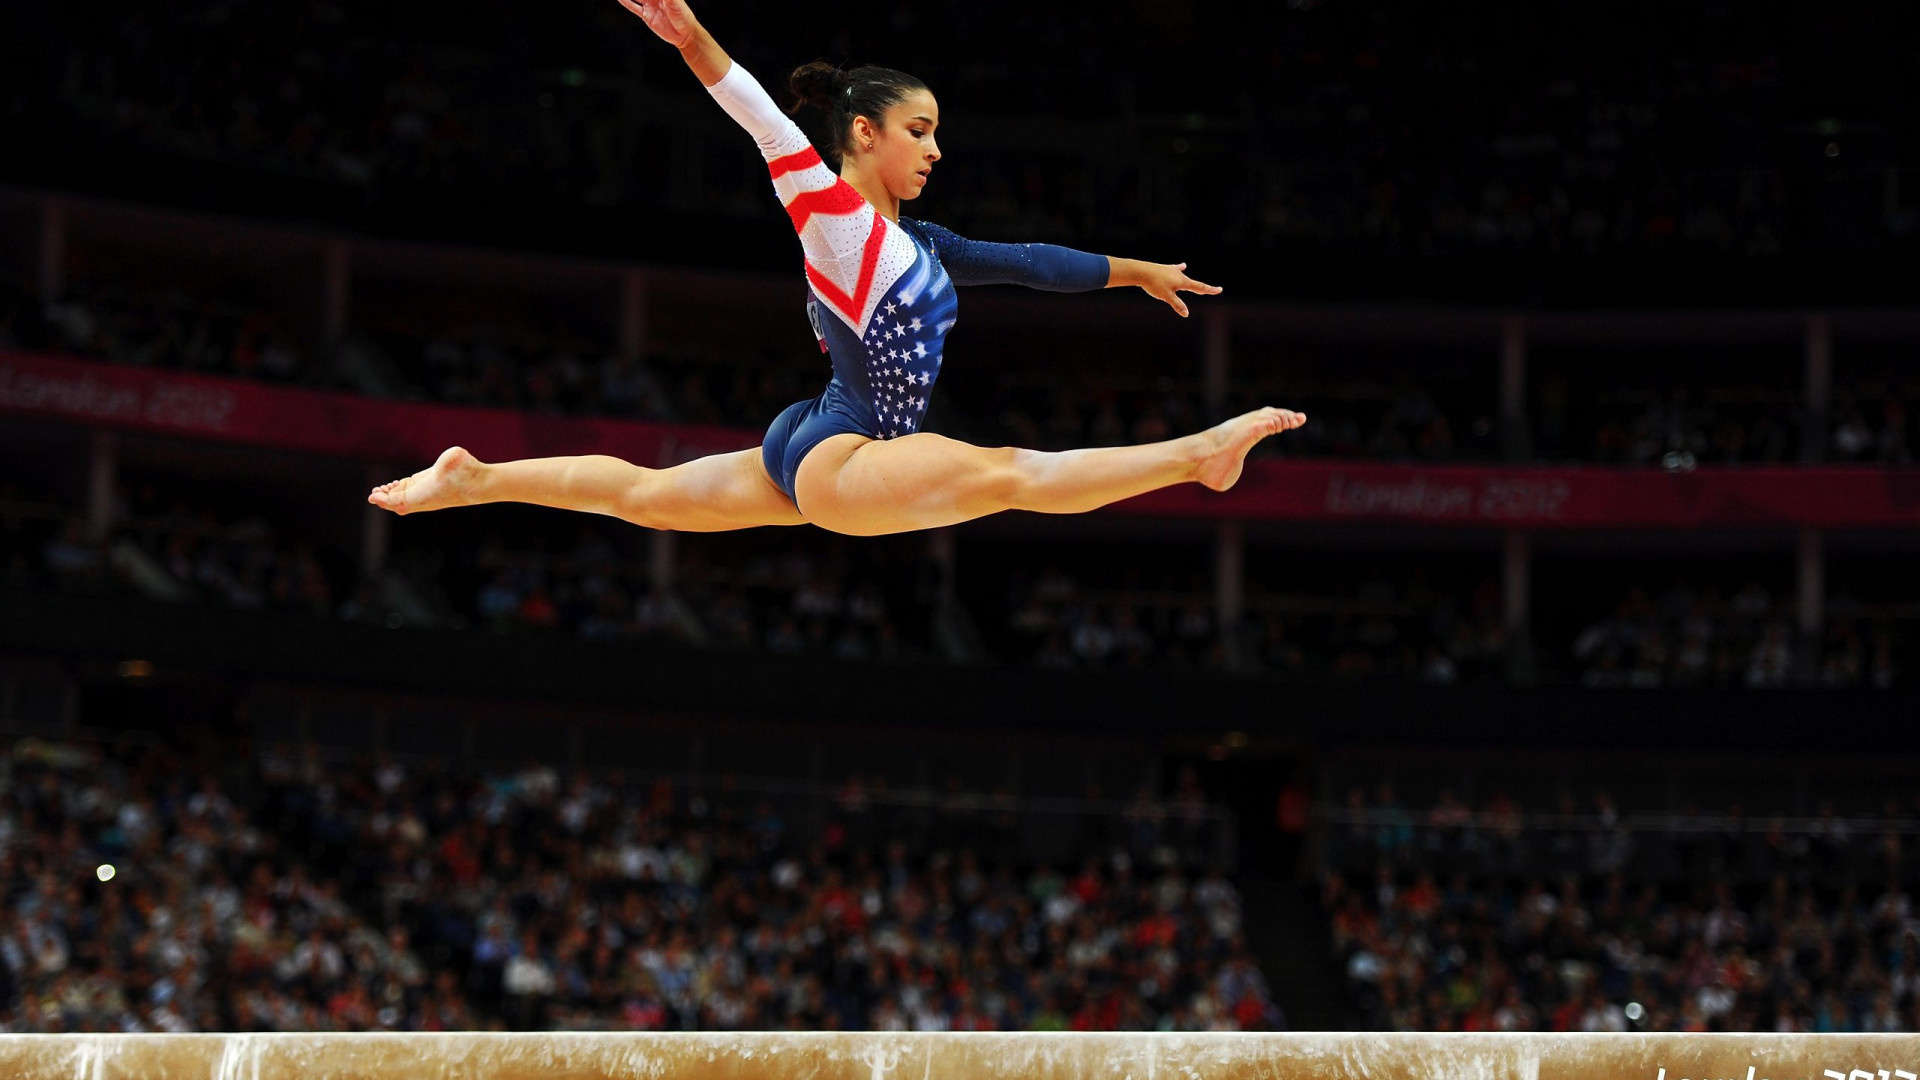 Acrobatic Gymnastics: Alexandra Rose Raisman, The 2012 London Summer Olympics team and floor competitions gold medalist. 1920x1080 Full HD Wallpaper.